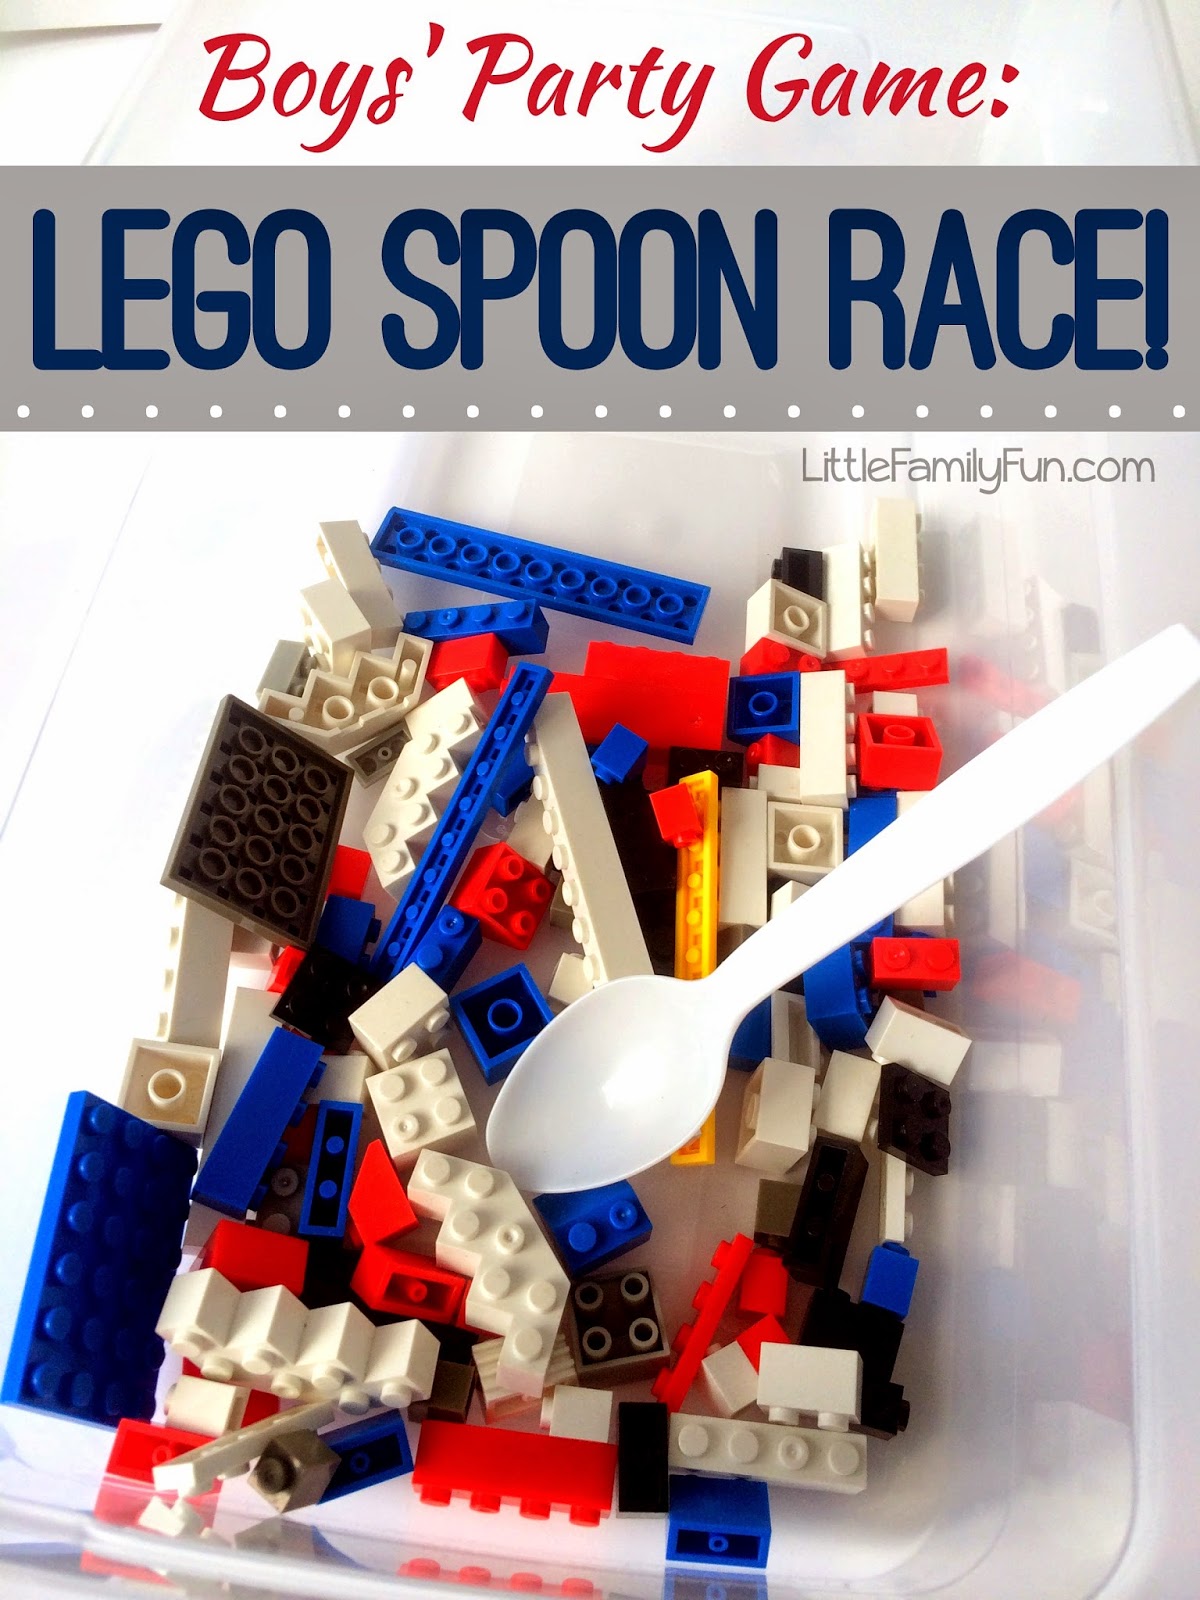 http://www.littlefamilyfun.com/2014/03/lego-spoon-race.html